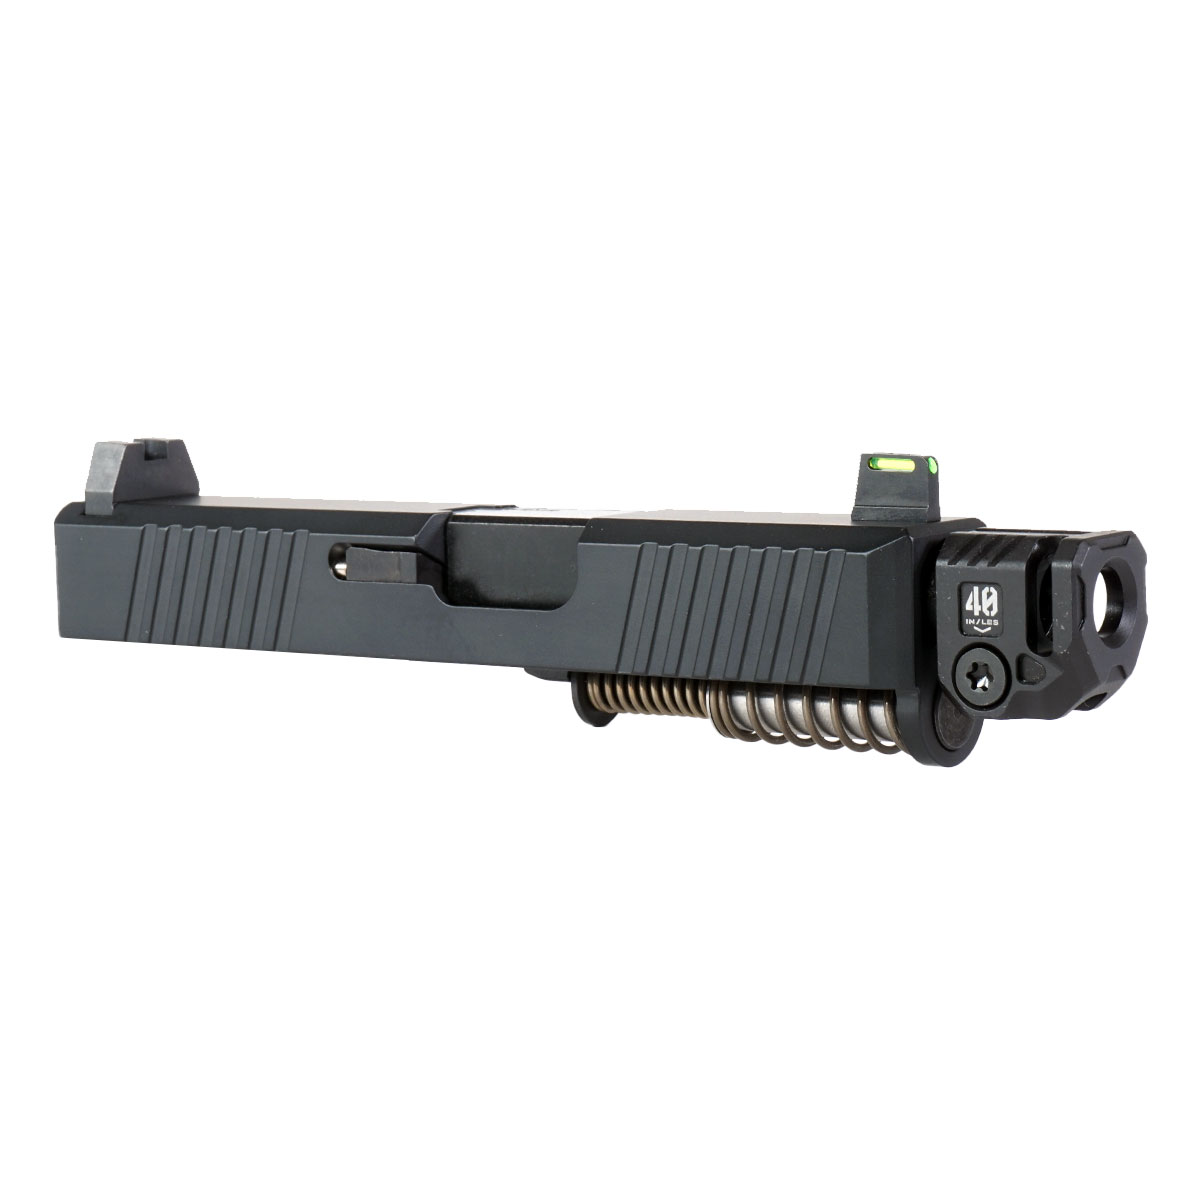 DTT 'Joint Resolution' 9mm Complete Slide Kit - Glock 26 Gen 1-3 Compatible